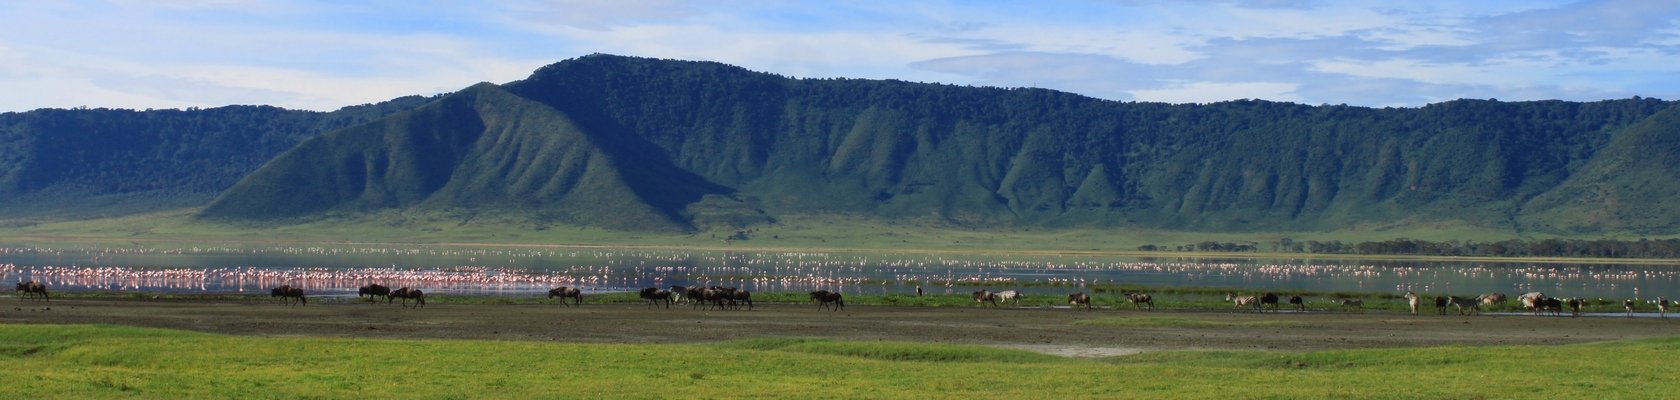 Ngorongoro krater